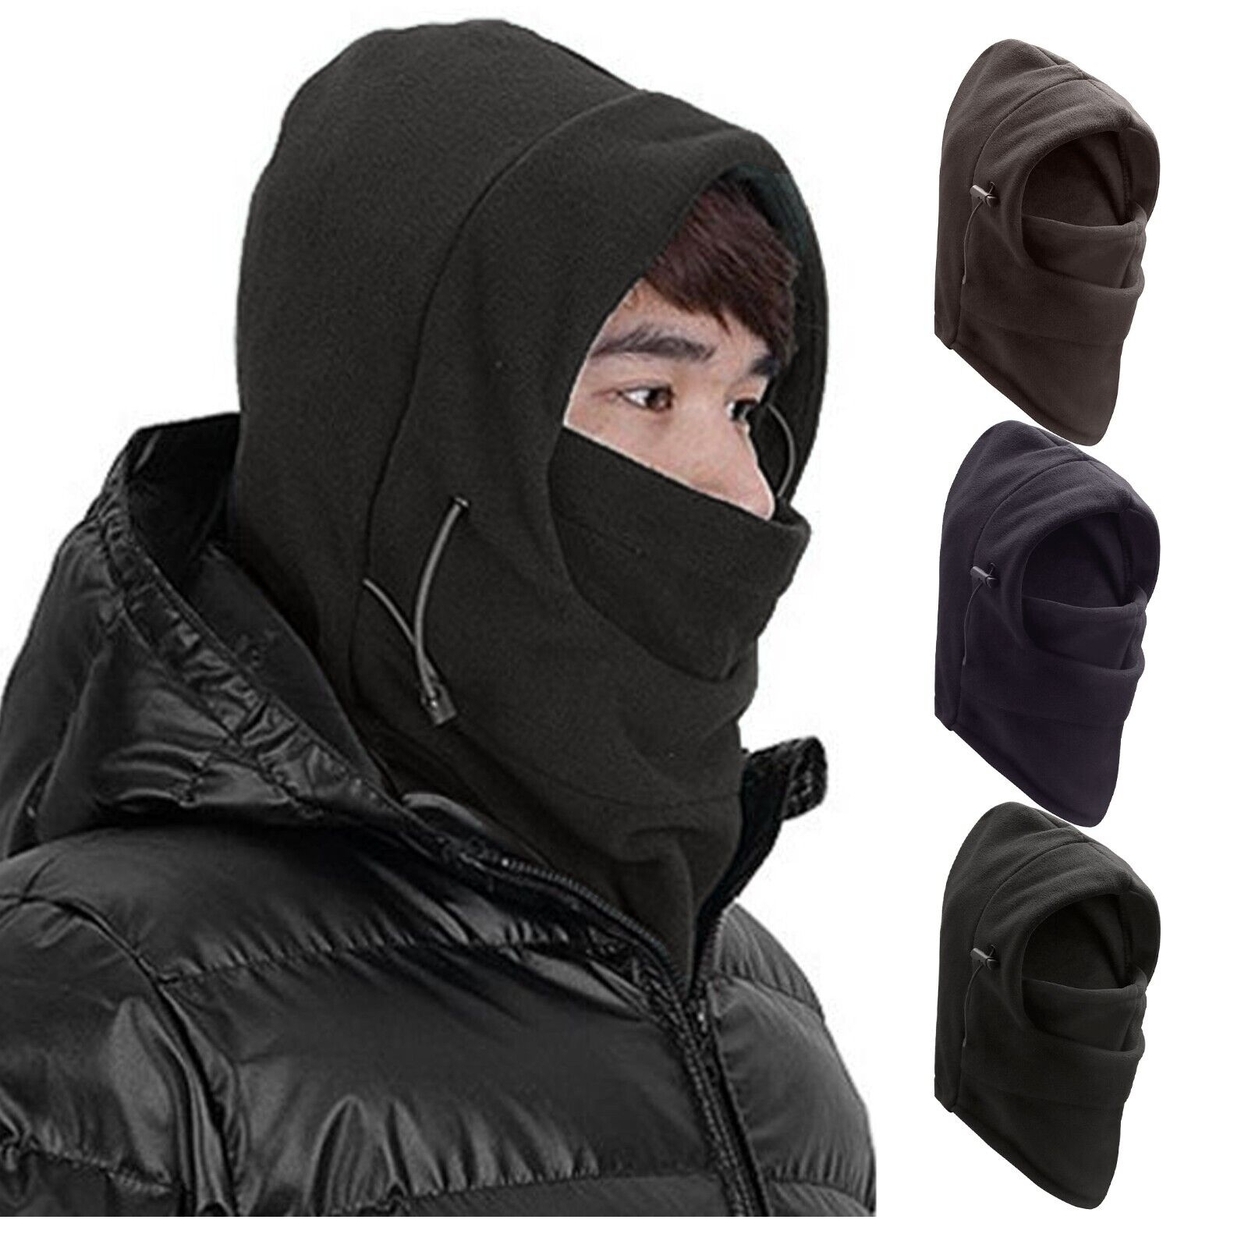 Men's Cozy Ultra Soft Warm Fleece Lined Windproof Balaclava Thermal Ski Face Mask - Navy